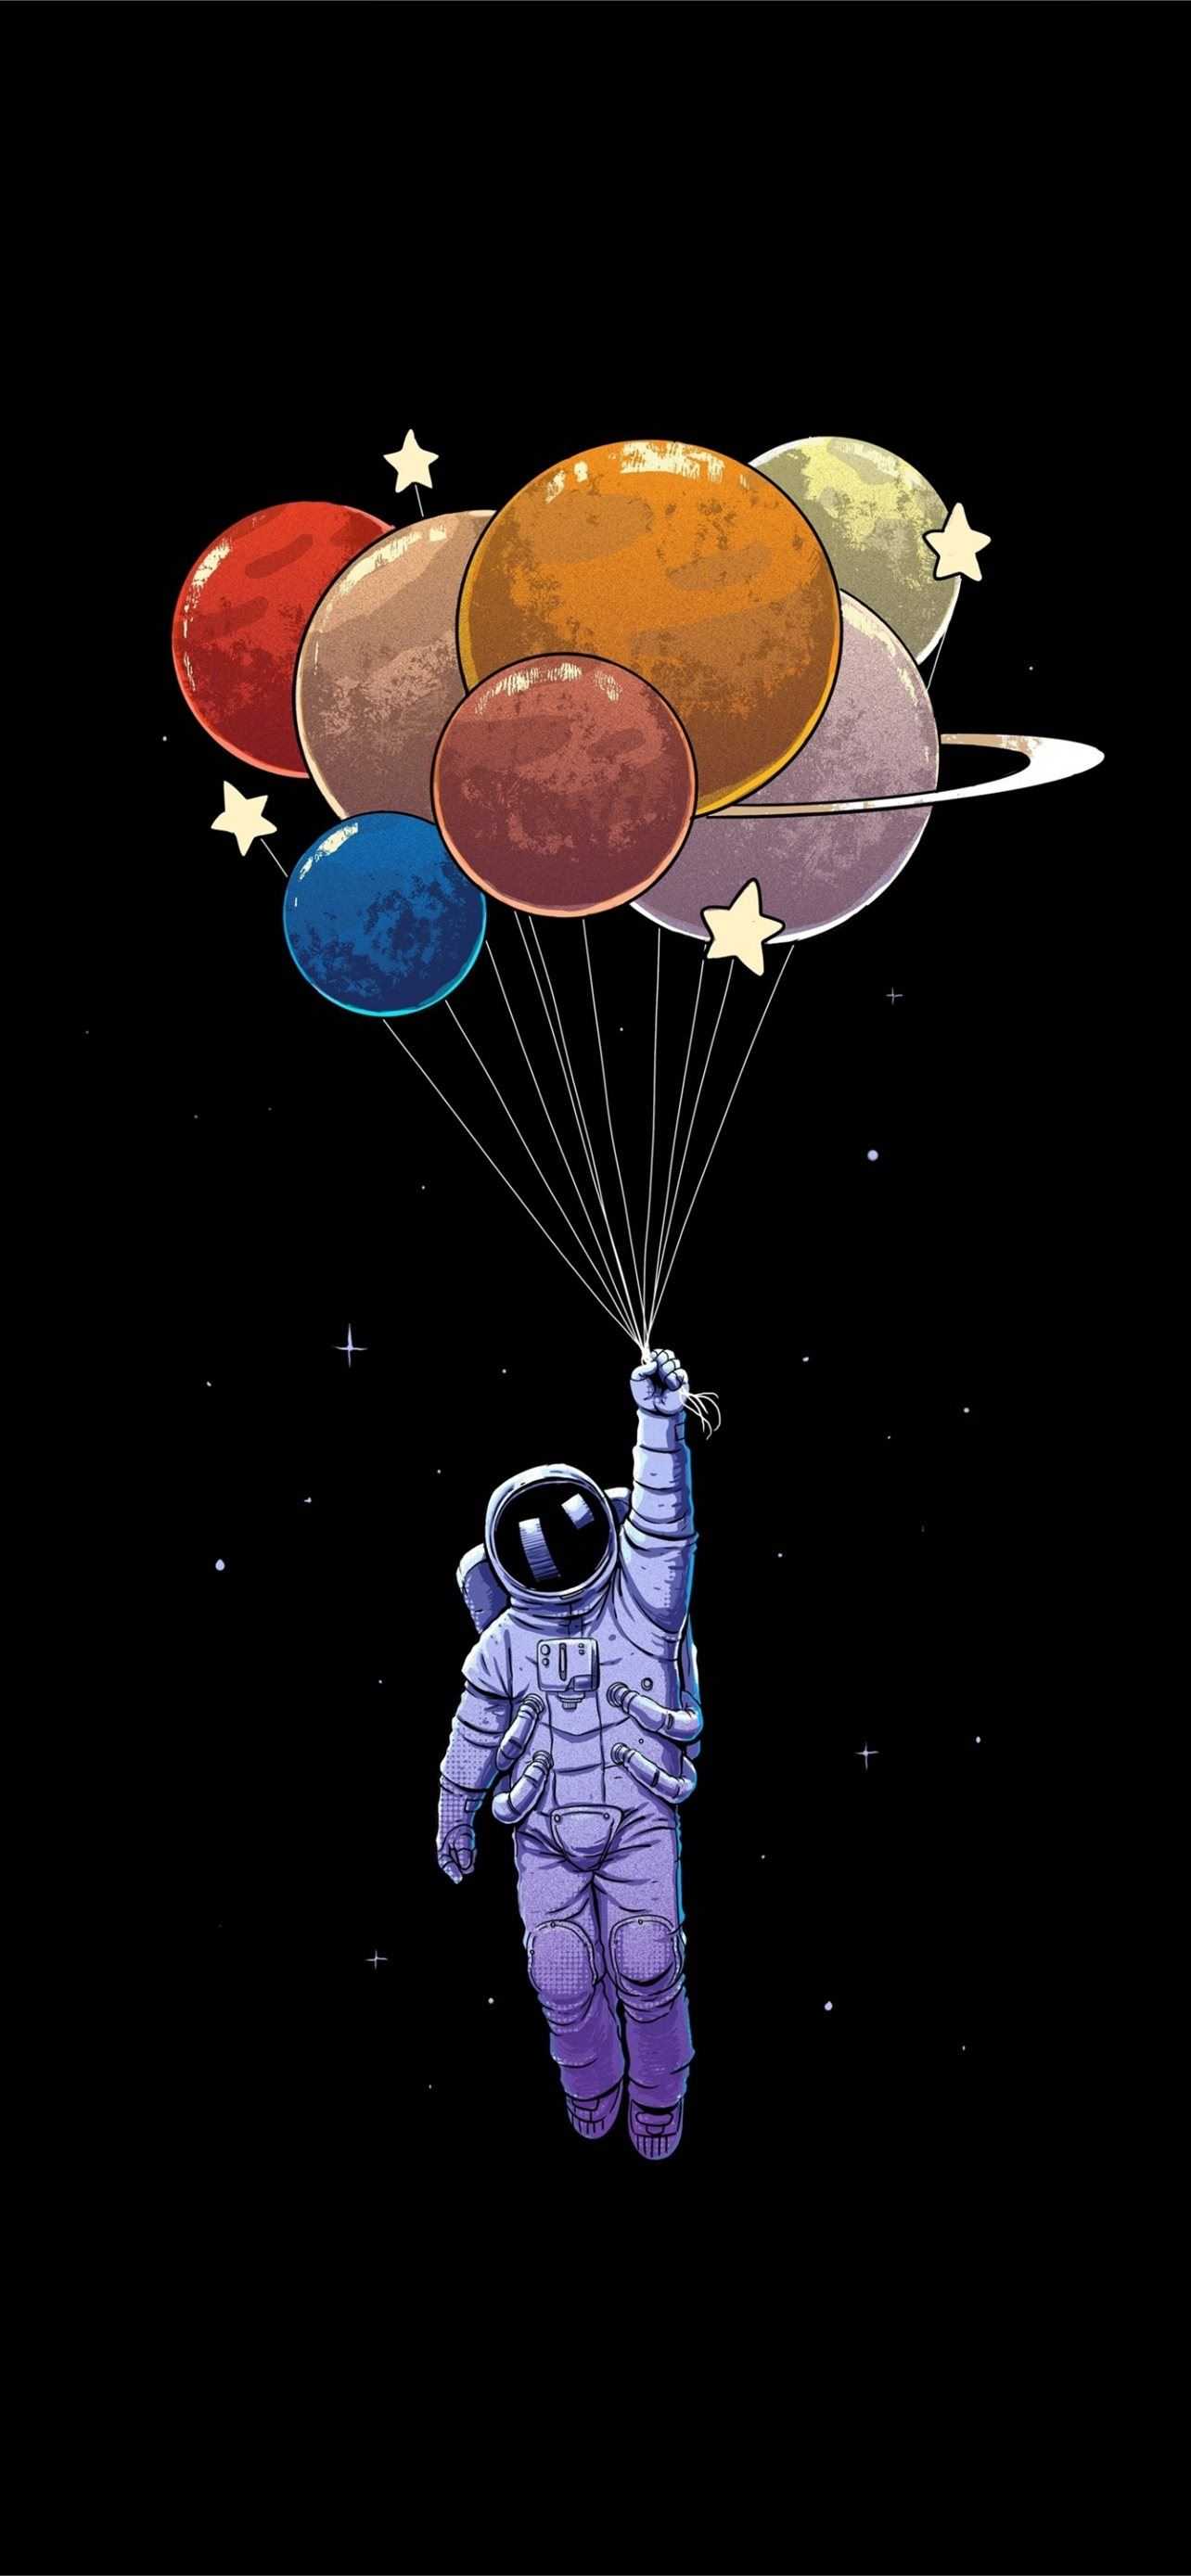 4K Astronaut Wallpaper - iXpap